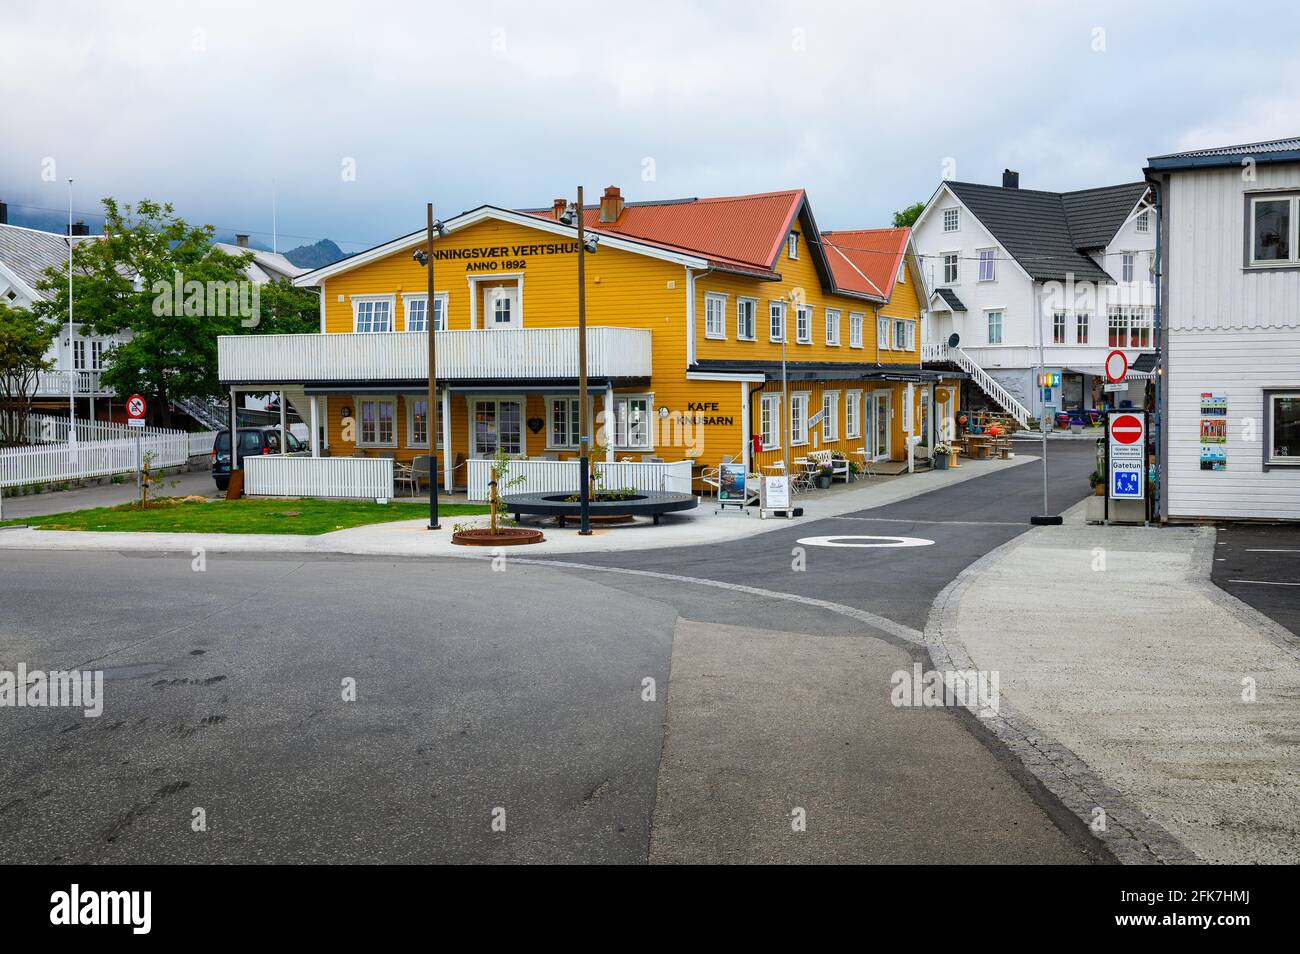 Ristorante e caffè in tipica architettura norvegese a Henningsvaer, Norvegia Foto Stock